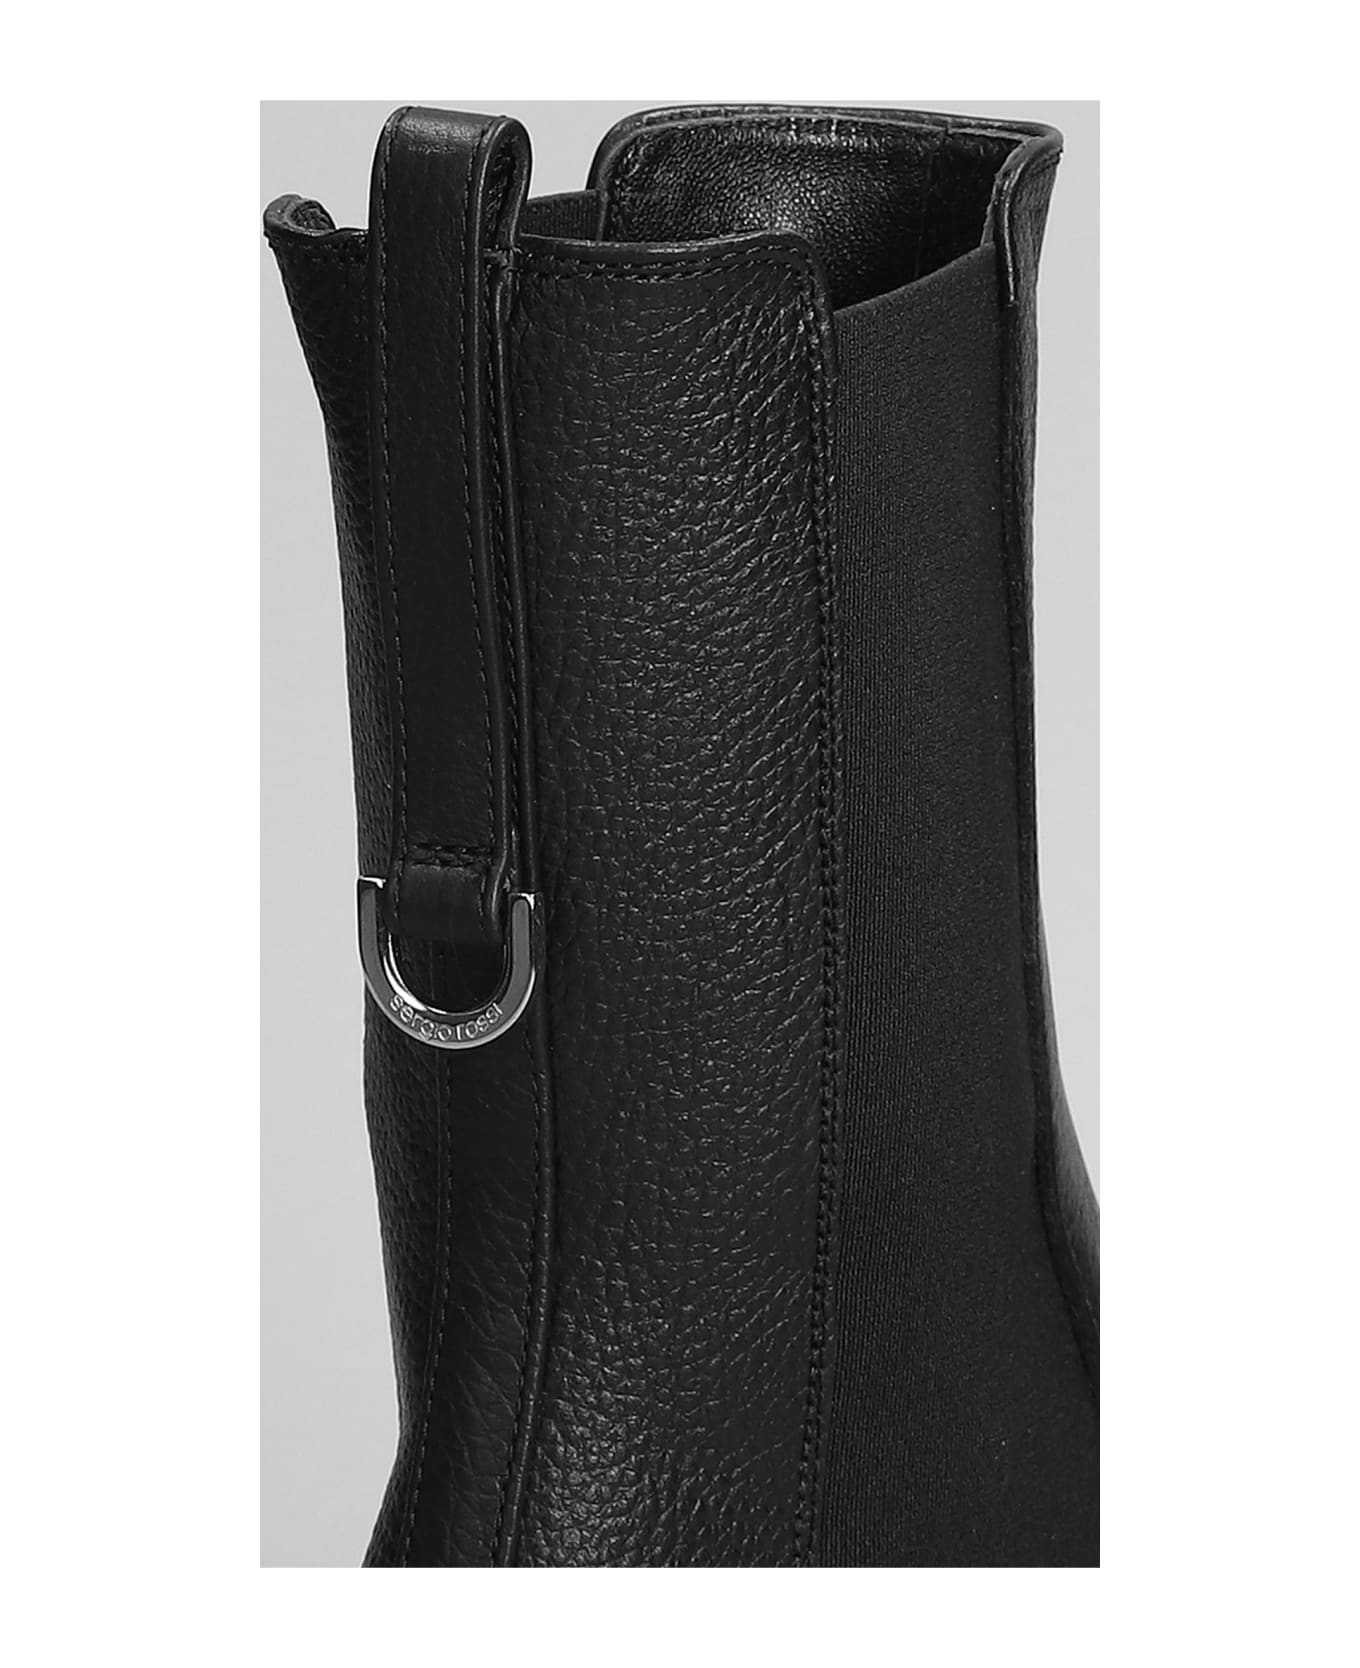 Sergio Rossi Combat Boots In Black Leather - black